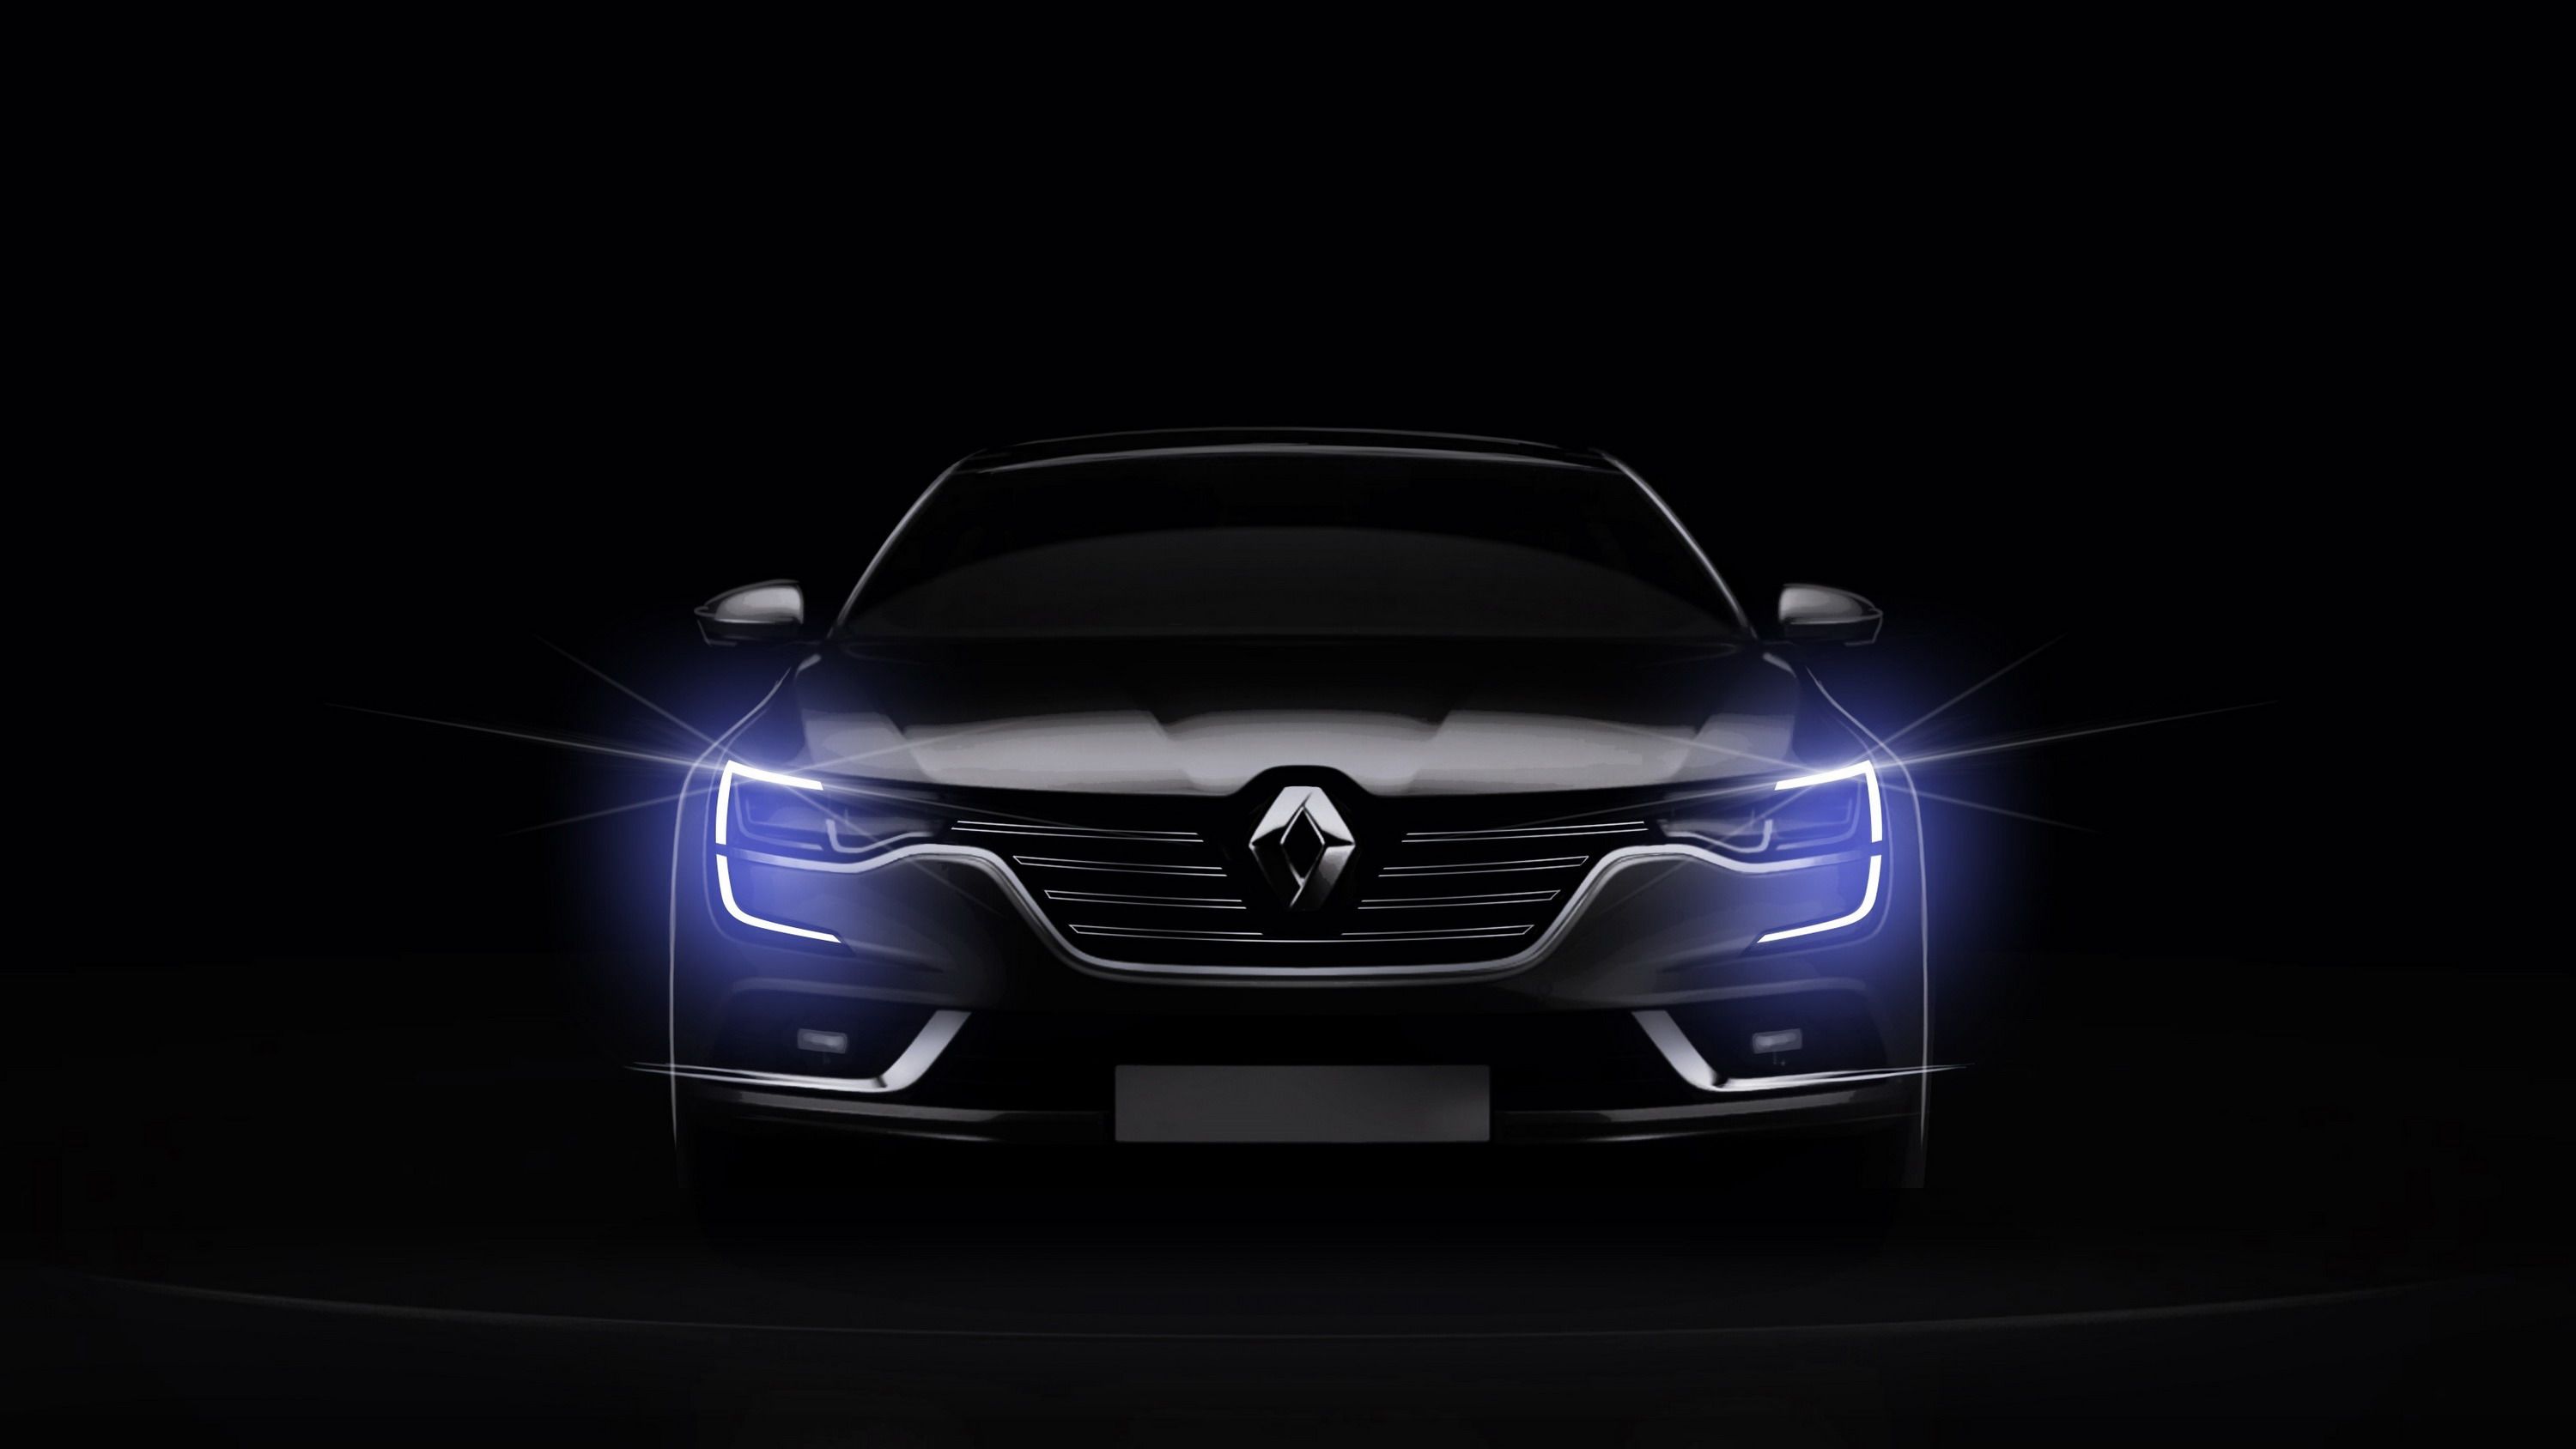 2016 Renault Talisman